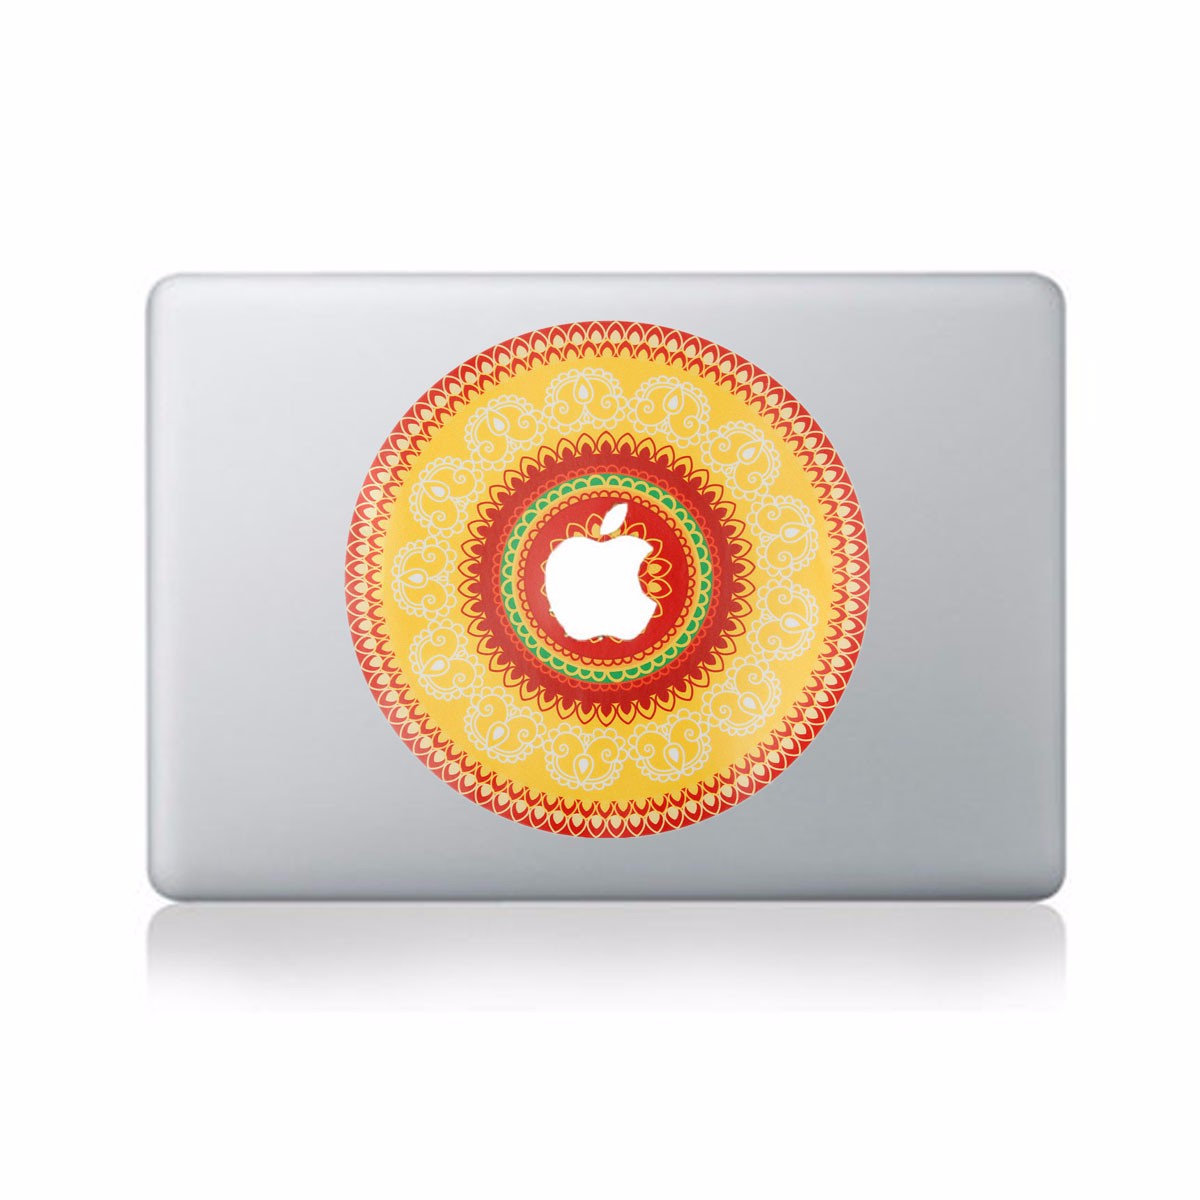 Lovely-Flower-Decal-Vinyl-Sticker-Skin-Laptop-Sticker-Decal-For-Apple-MacBook-11-12-13-15-17-1033207